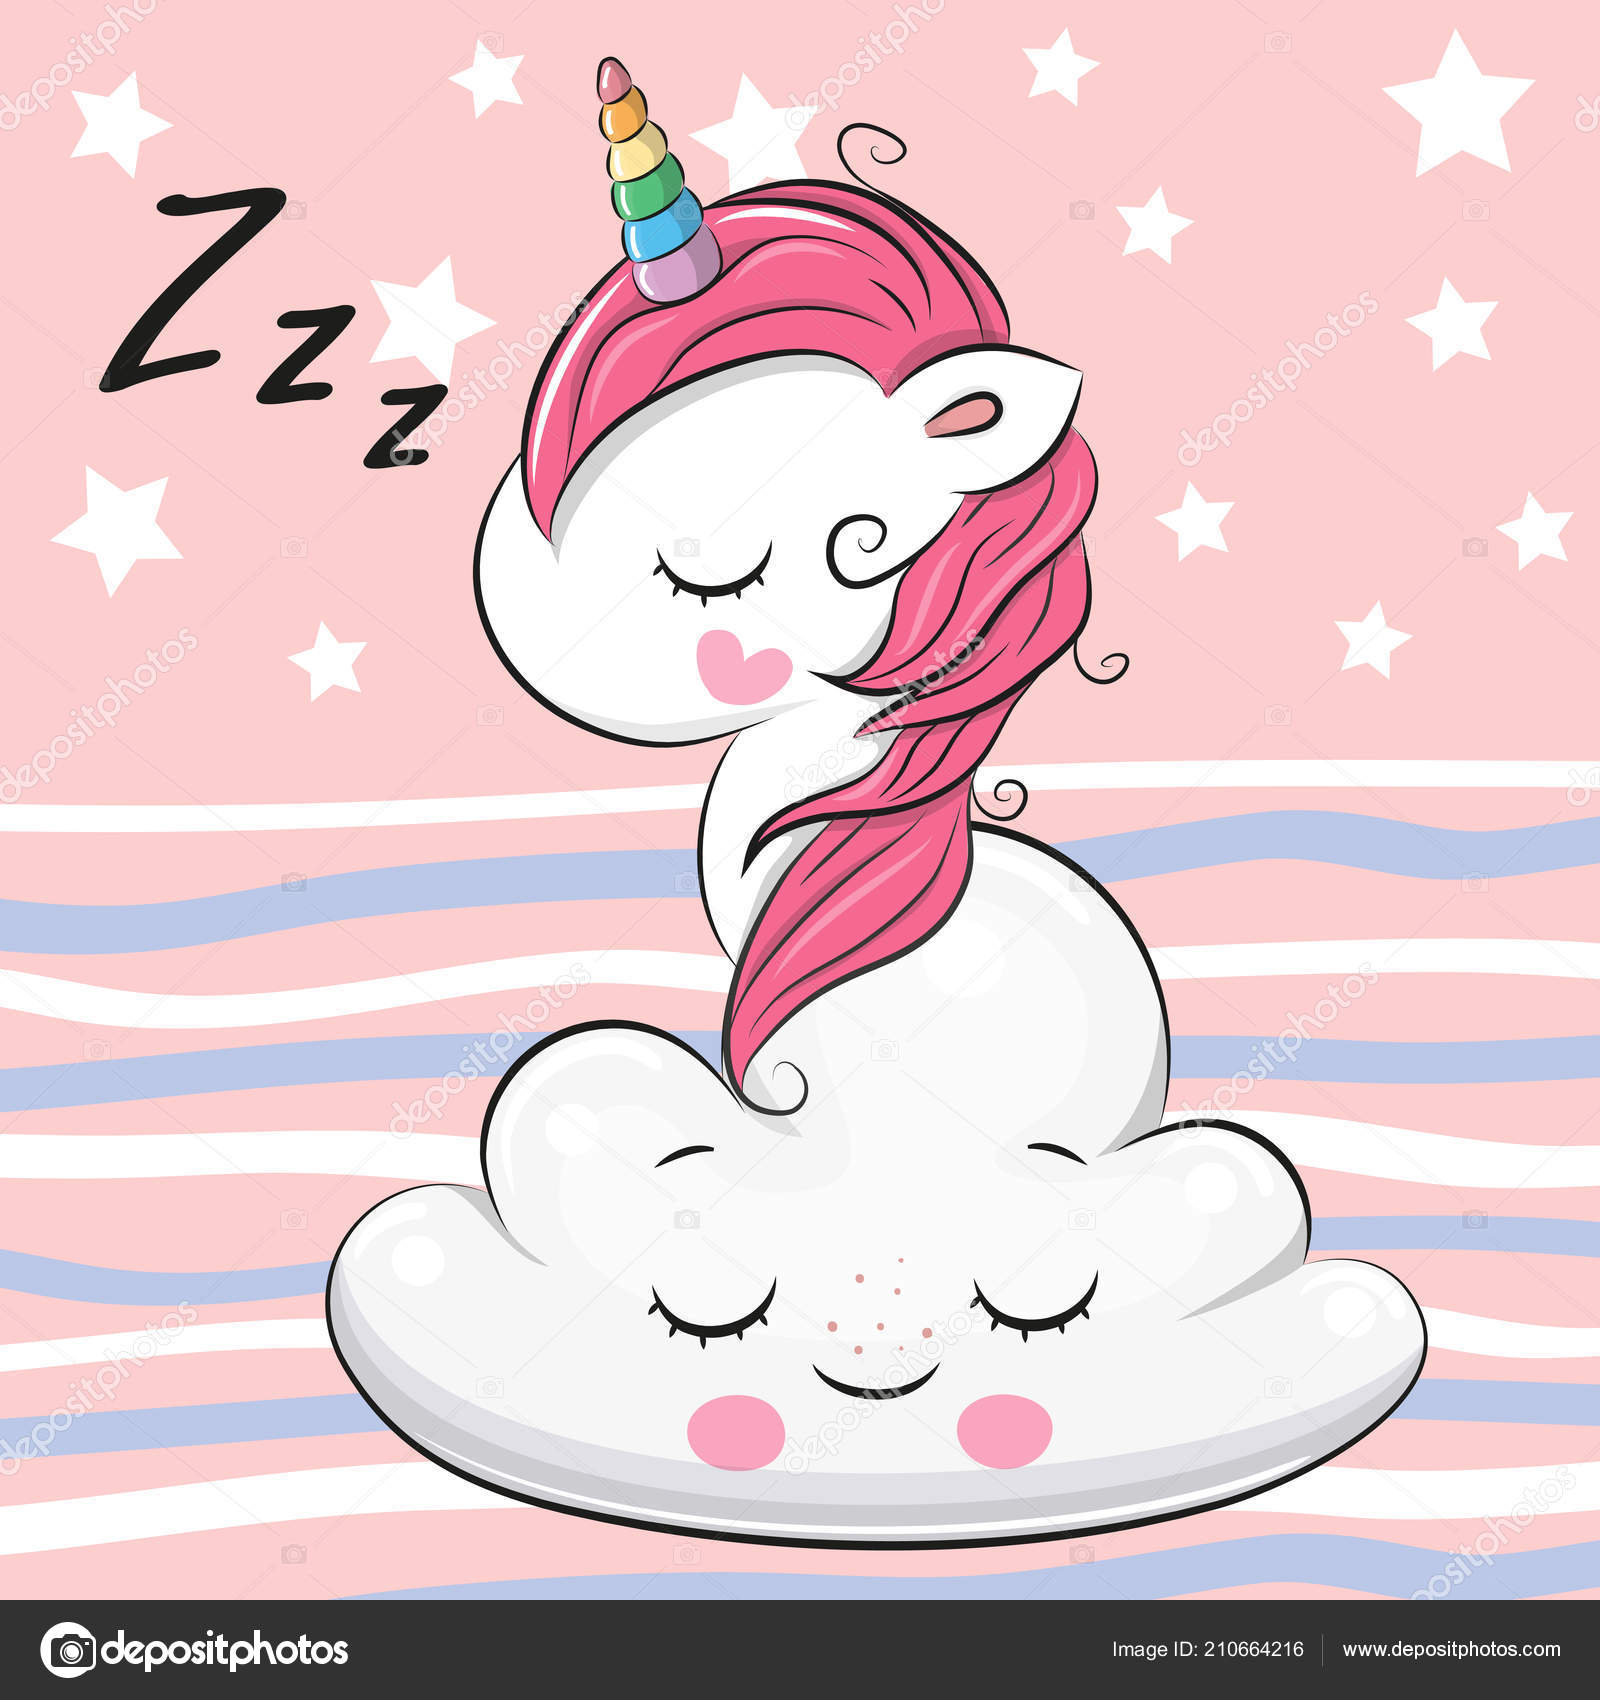 Cute Cartoon Unicorn Sleeping Cloud Stock Vector C Reginast777